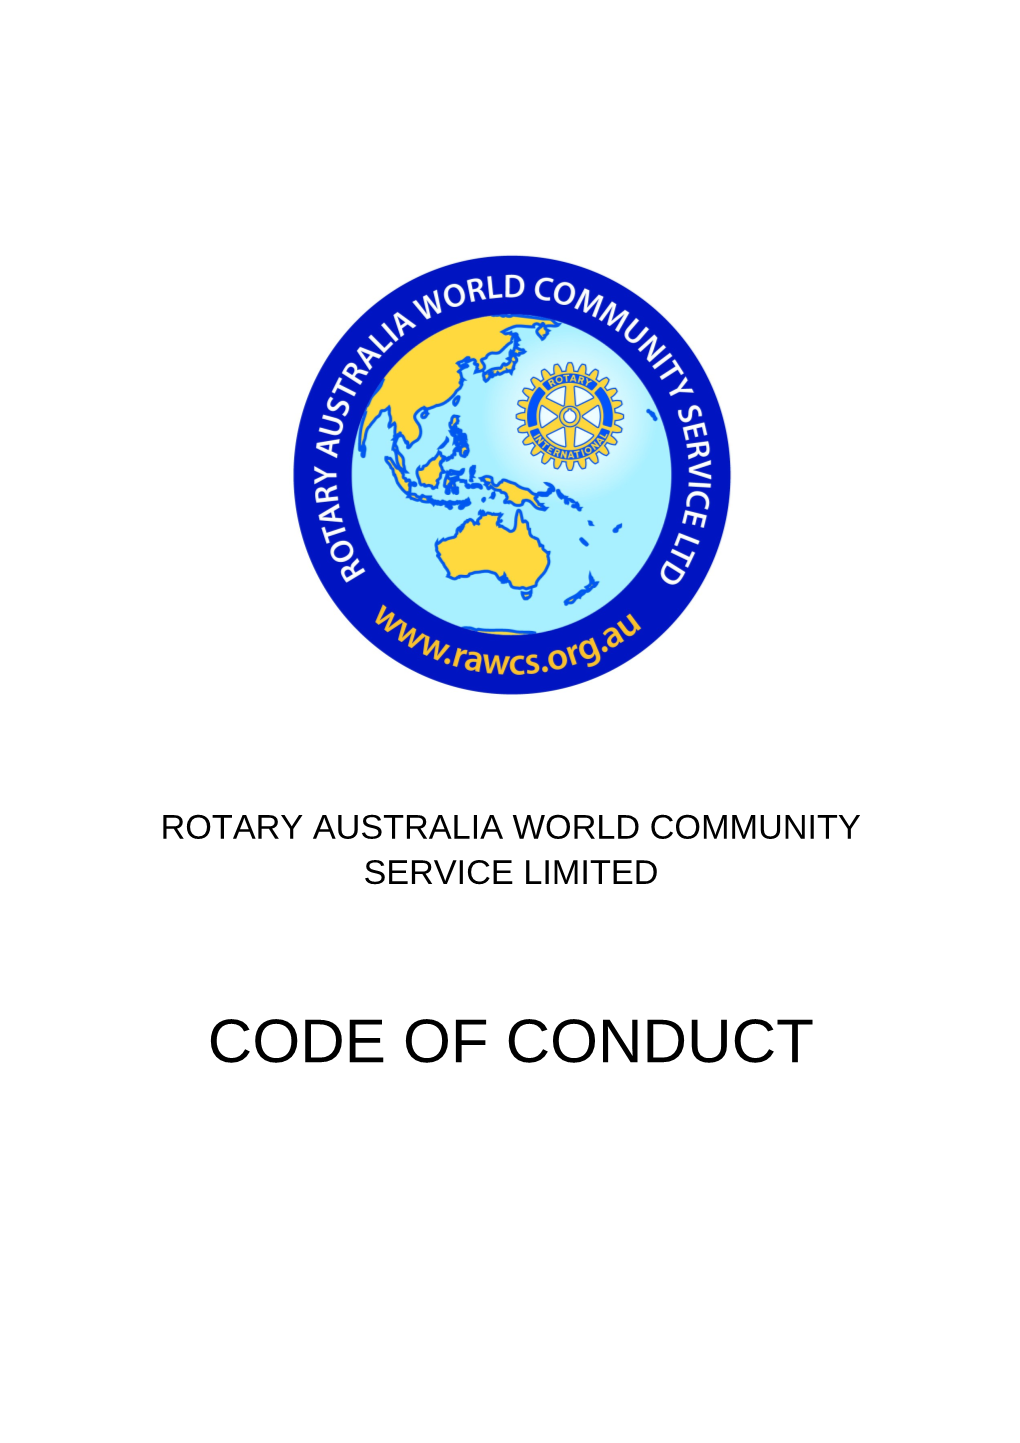 Rotary Australia World Community Service Limited